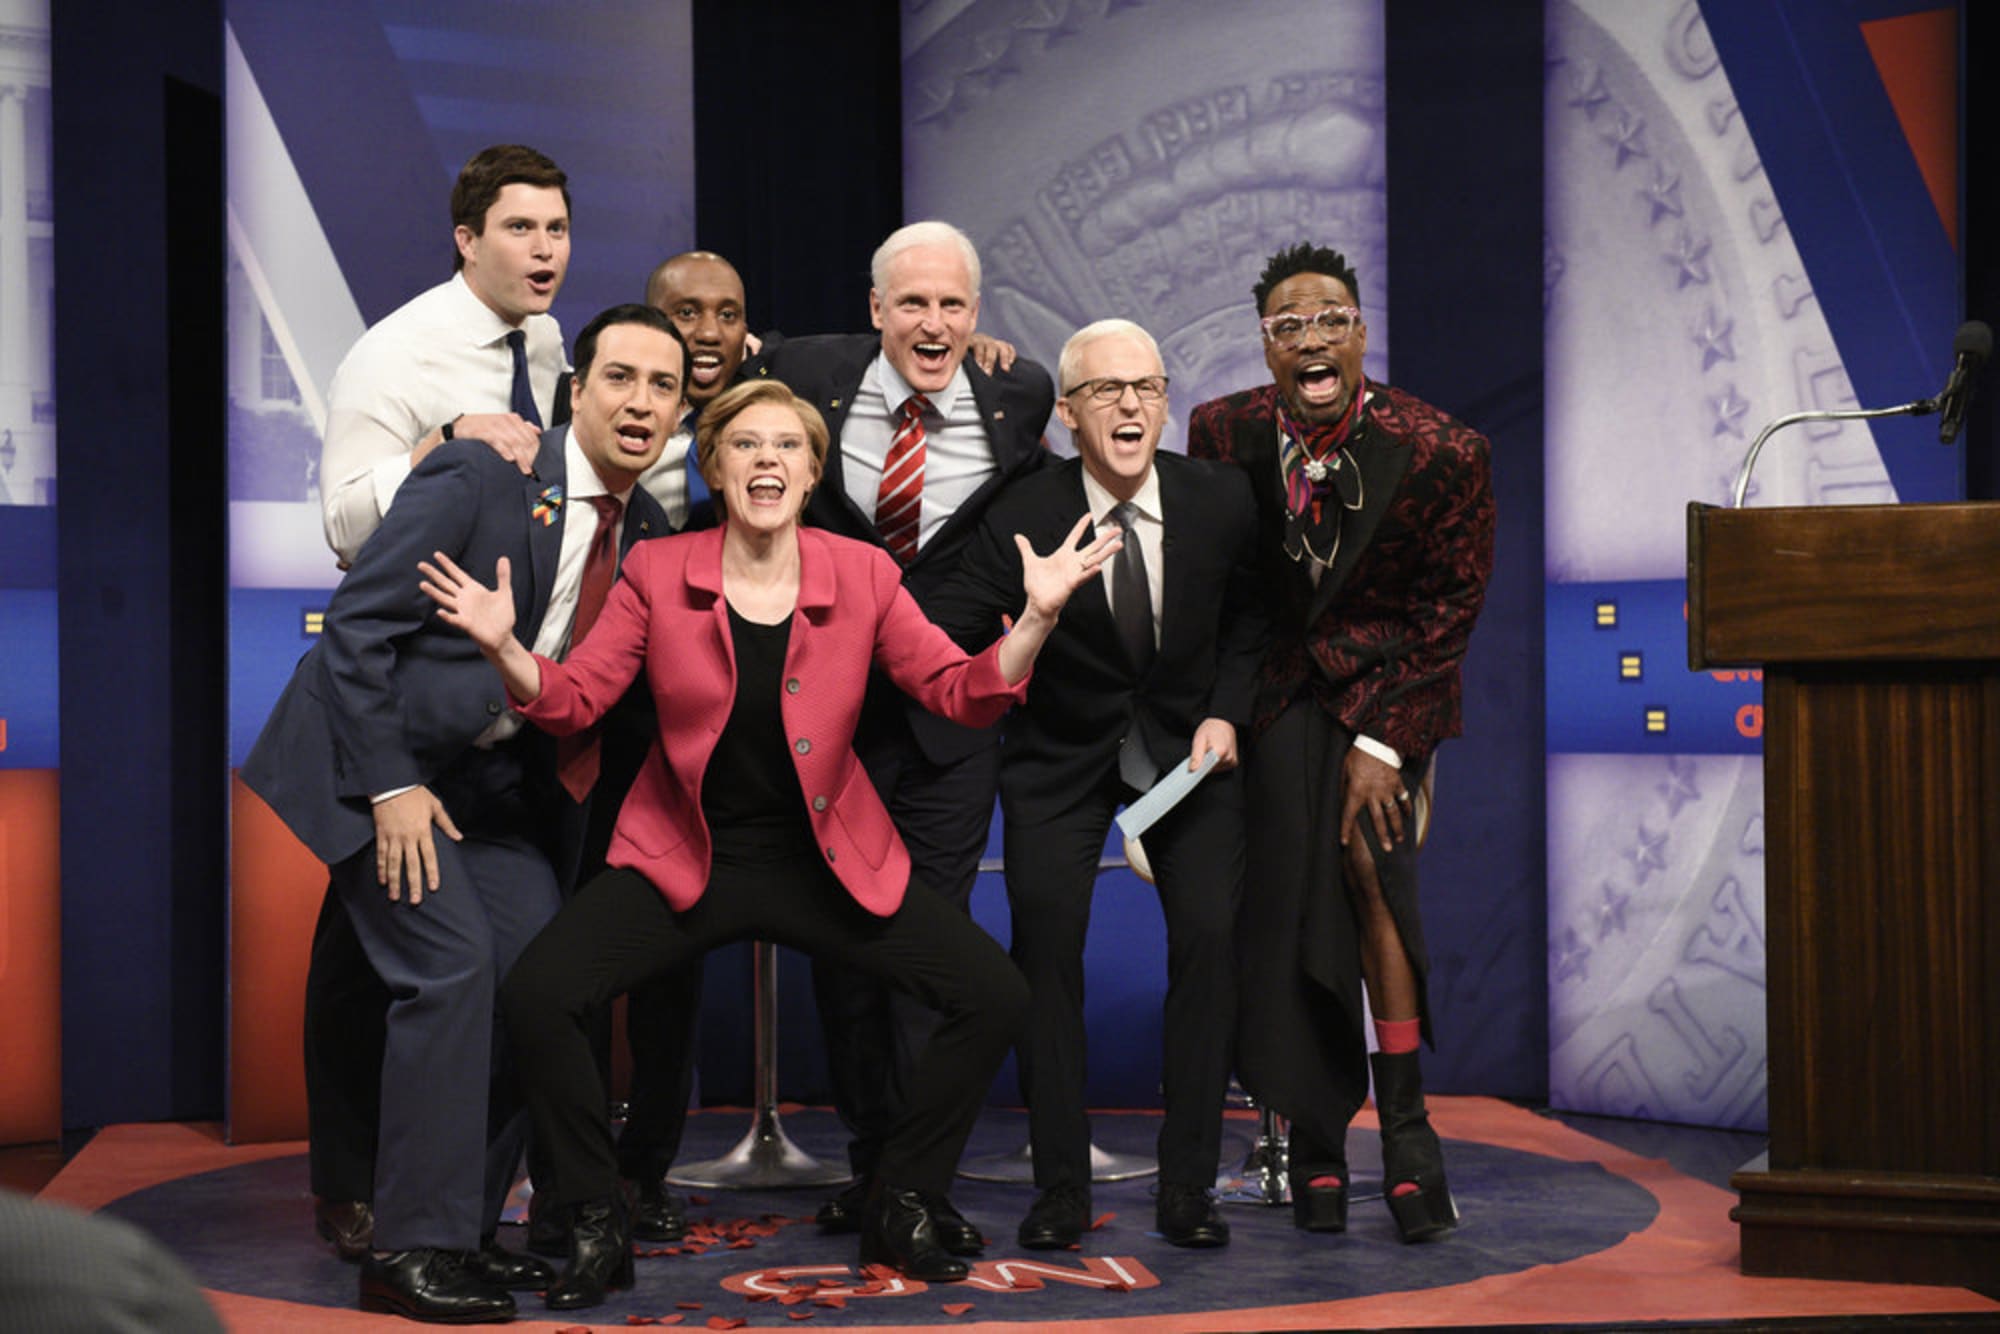 is Saturday Night Live new tonight, October 19, 2019?